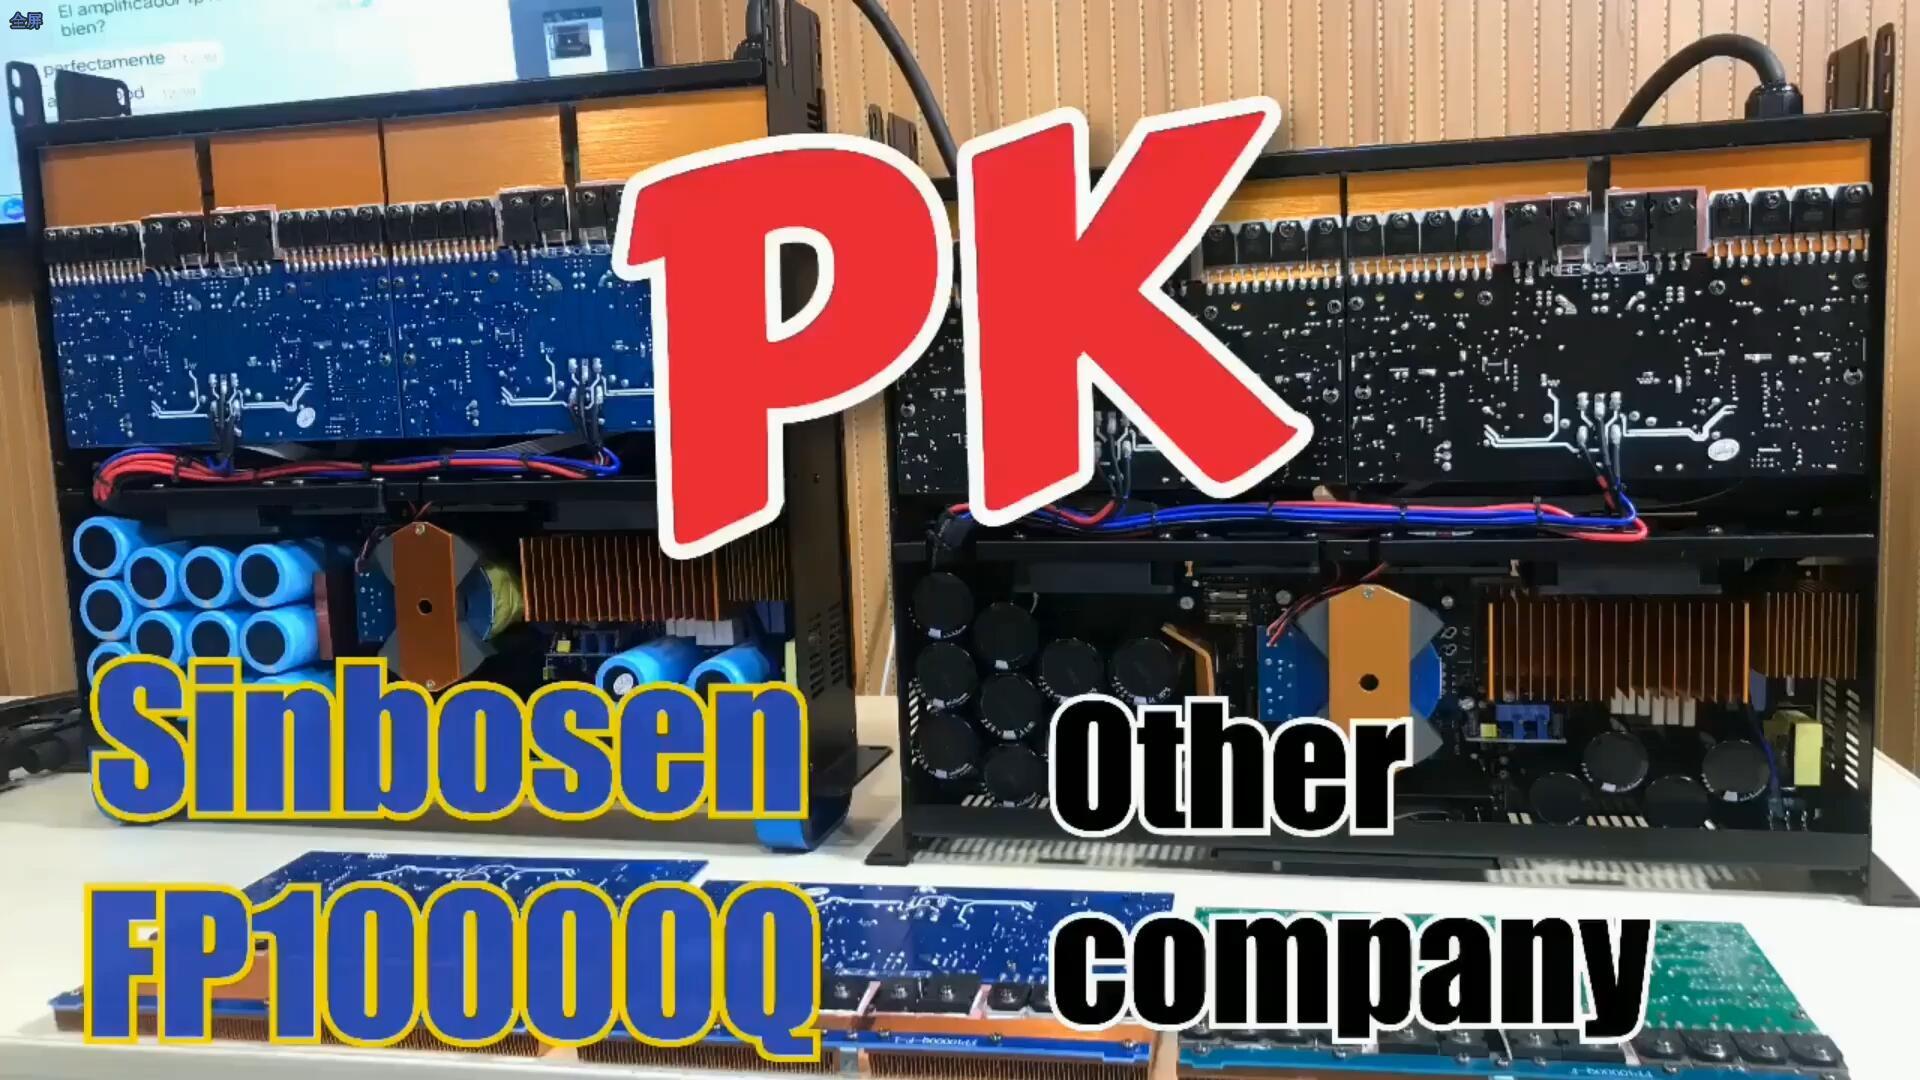 Sinbosen FP10000Q PK altra società